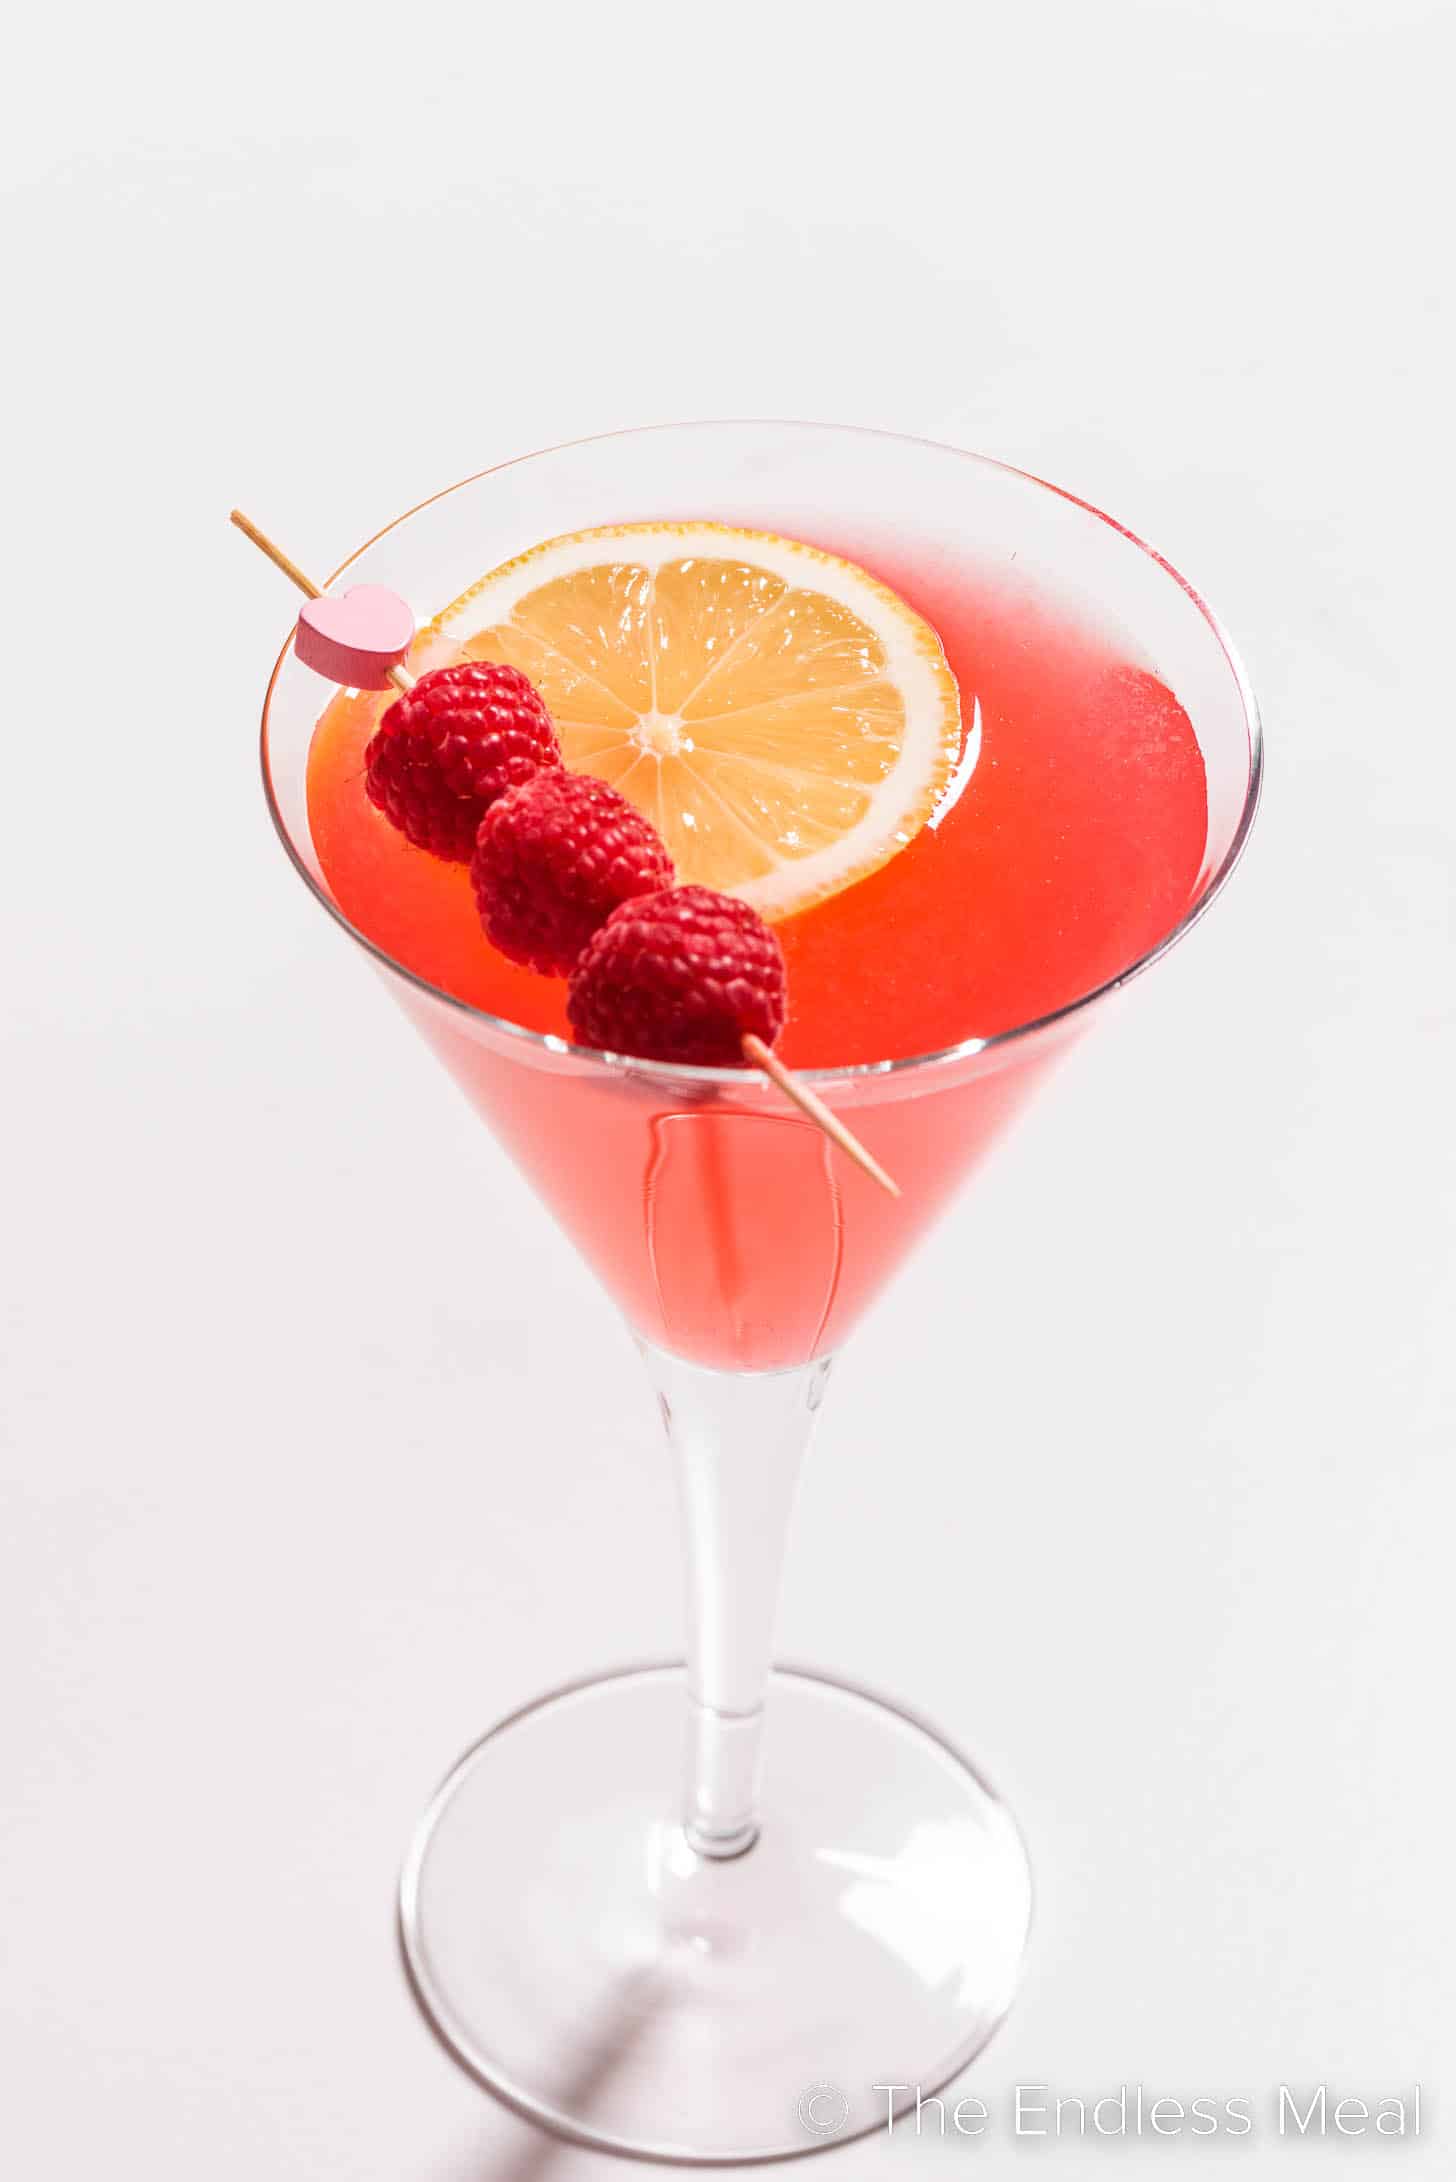 A Raspberry Martini with fresh raspberries and a lemon slice